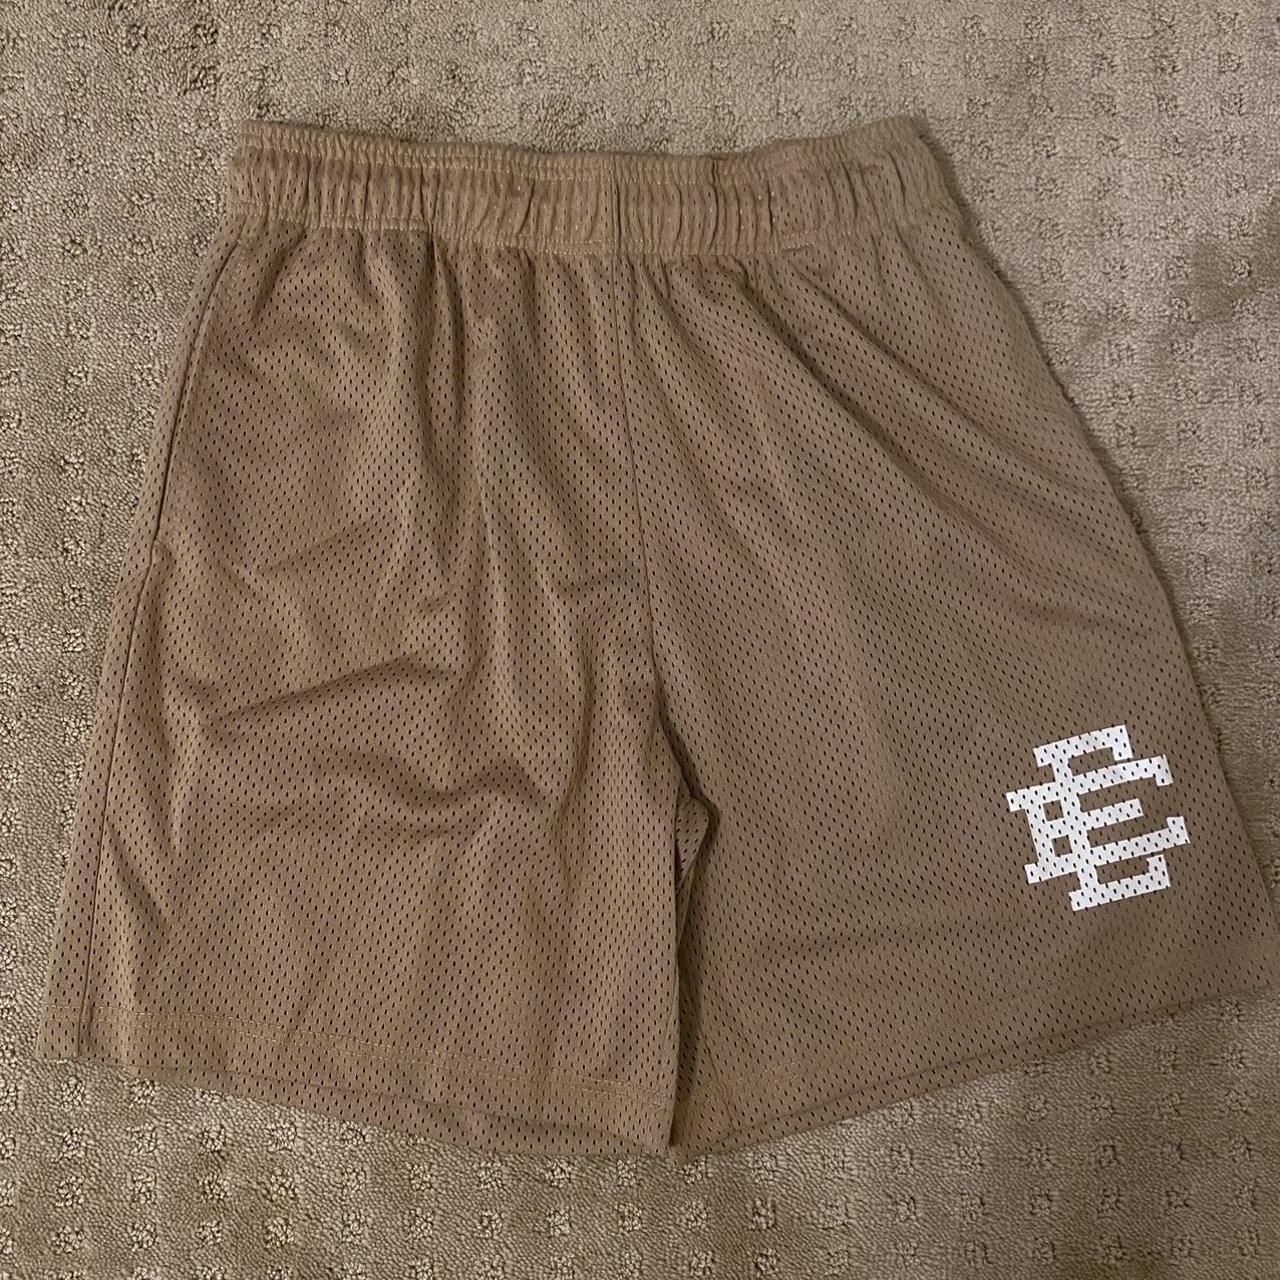 Eric emanuel x bape shorts size Large. Summer - Depop